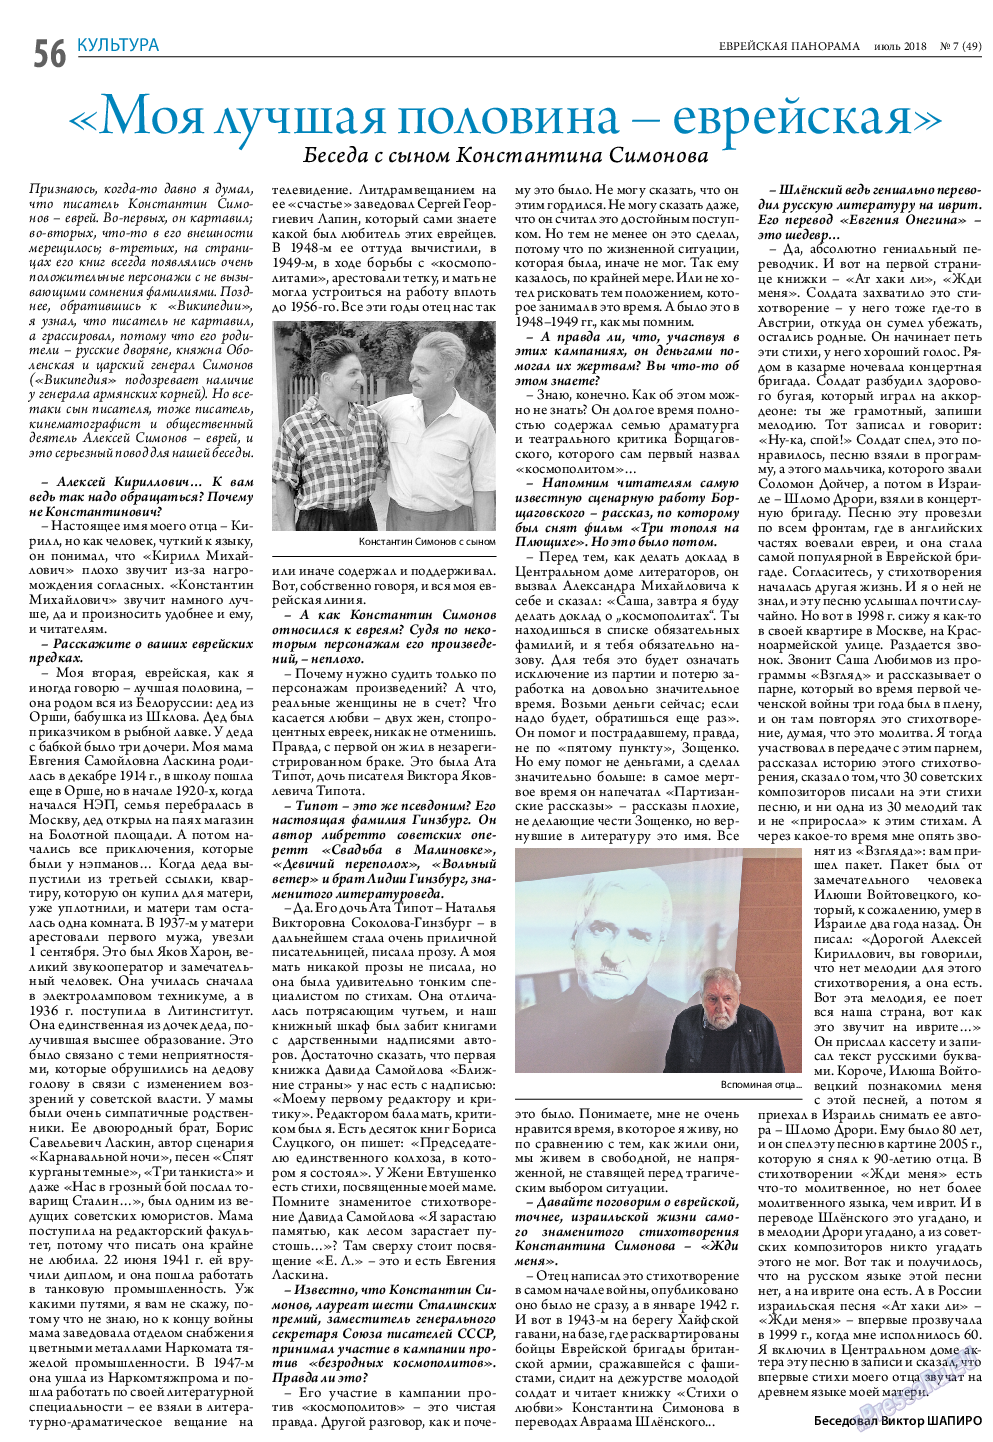 Еврейская панорама, газета. 2018 №7 стр.56